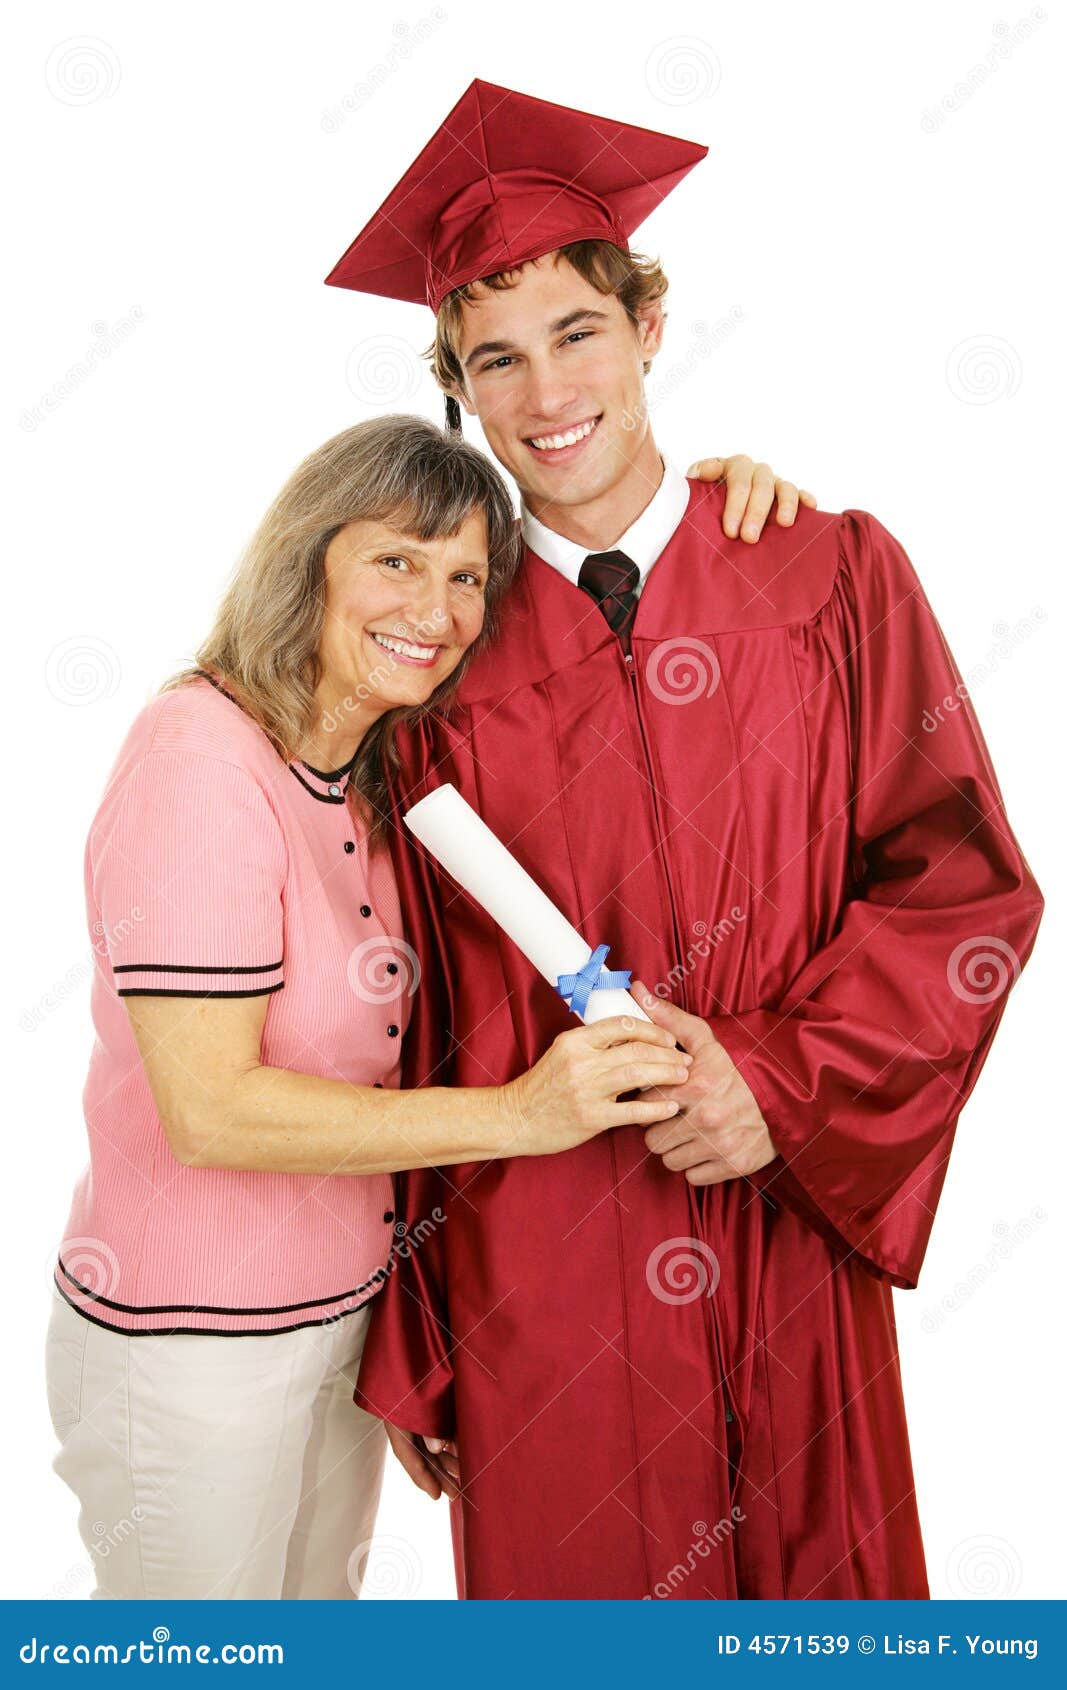 proud mom & graduate